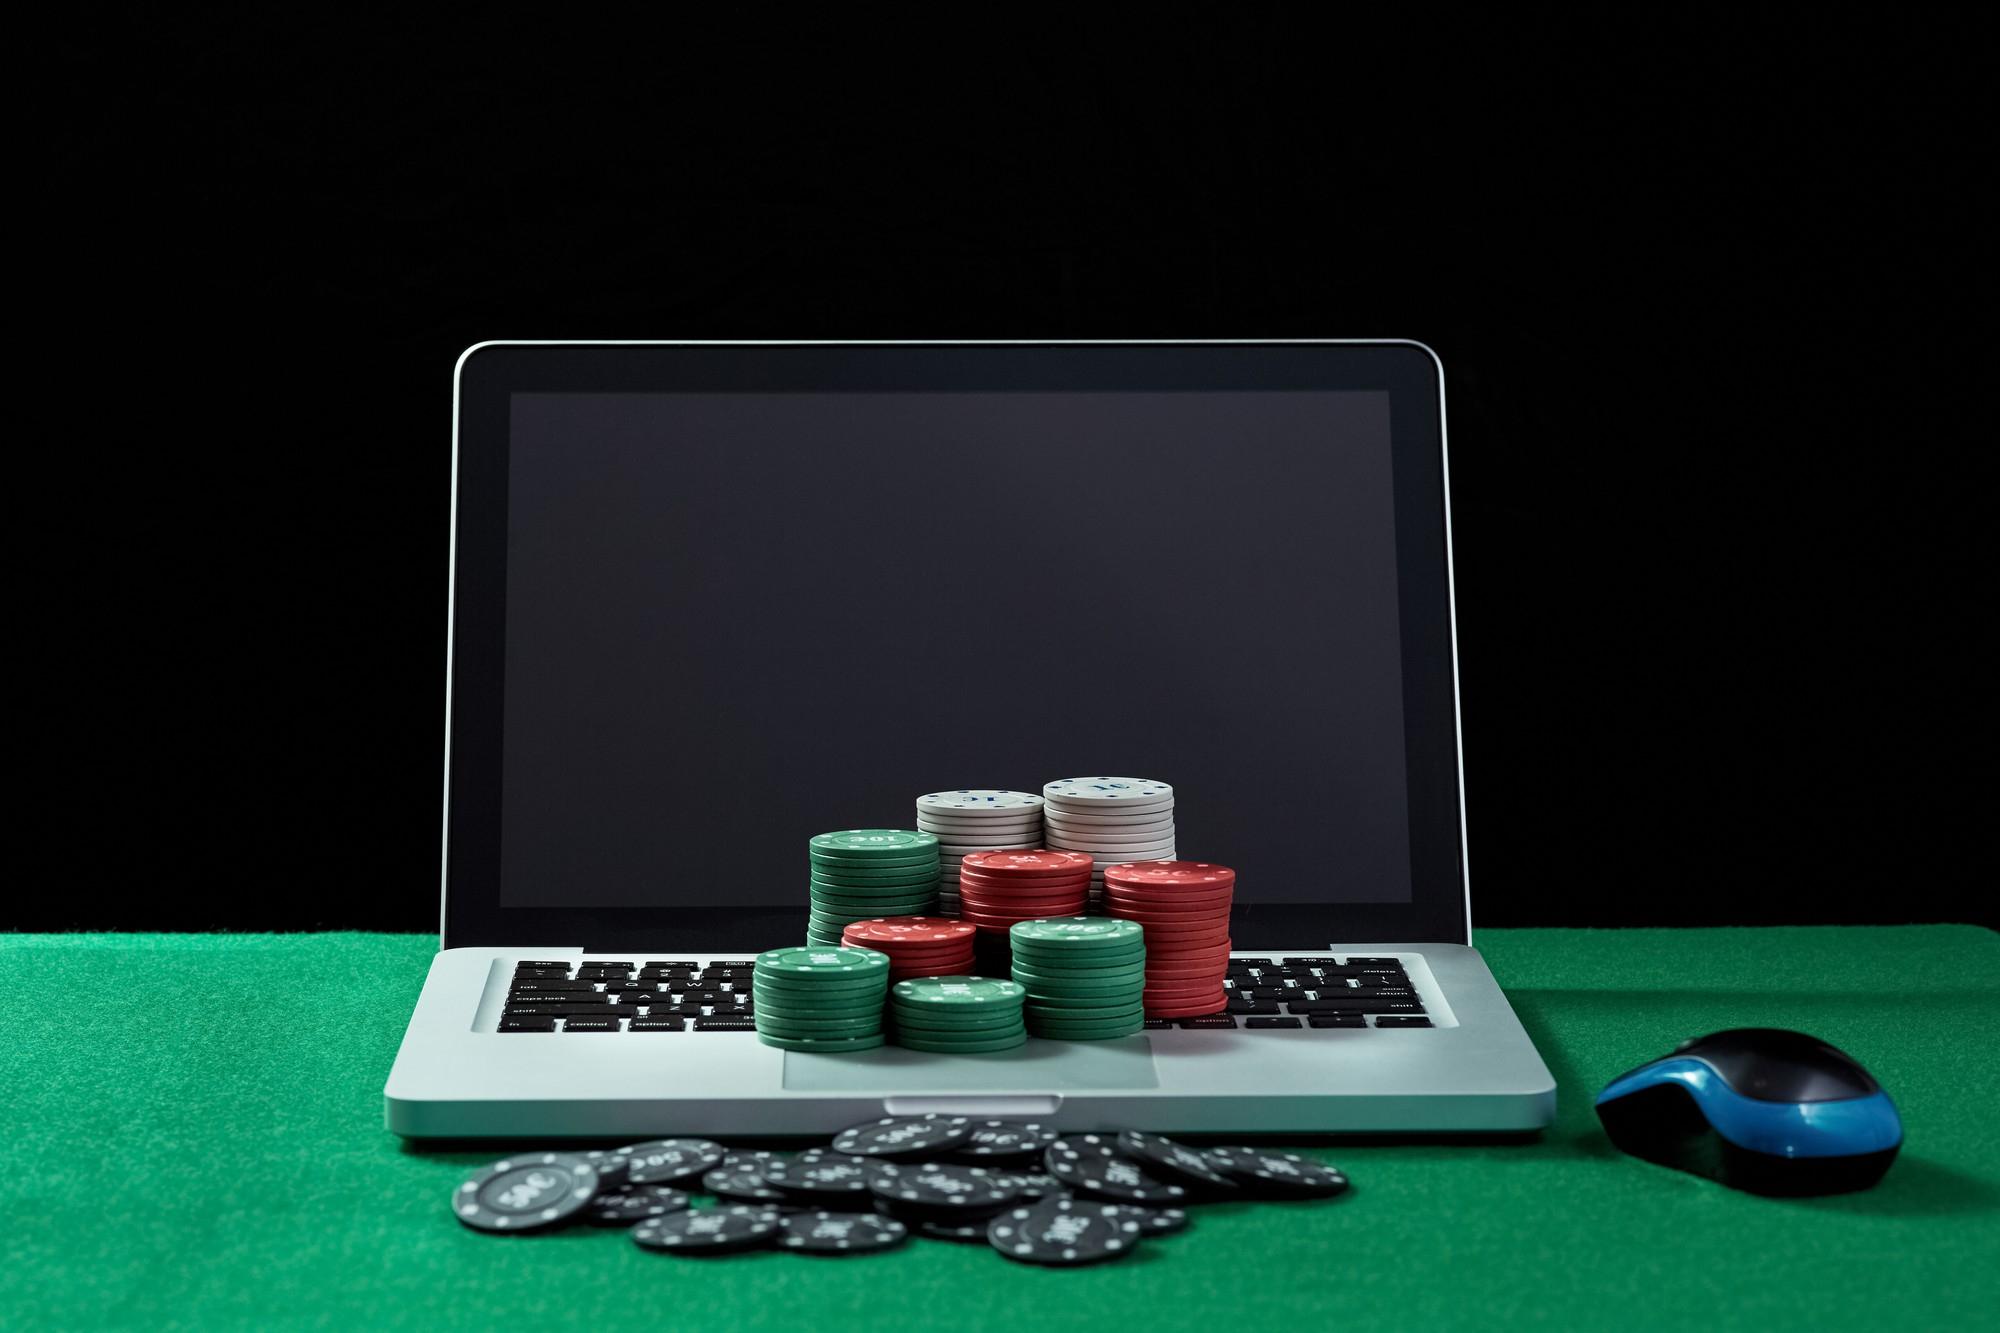 image-casino-chips-keyboard-notebook-green-table-concept-online-gambling-poker-virtual-casino